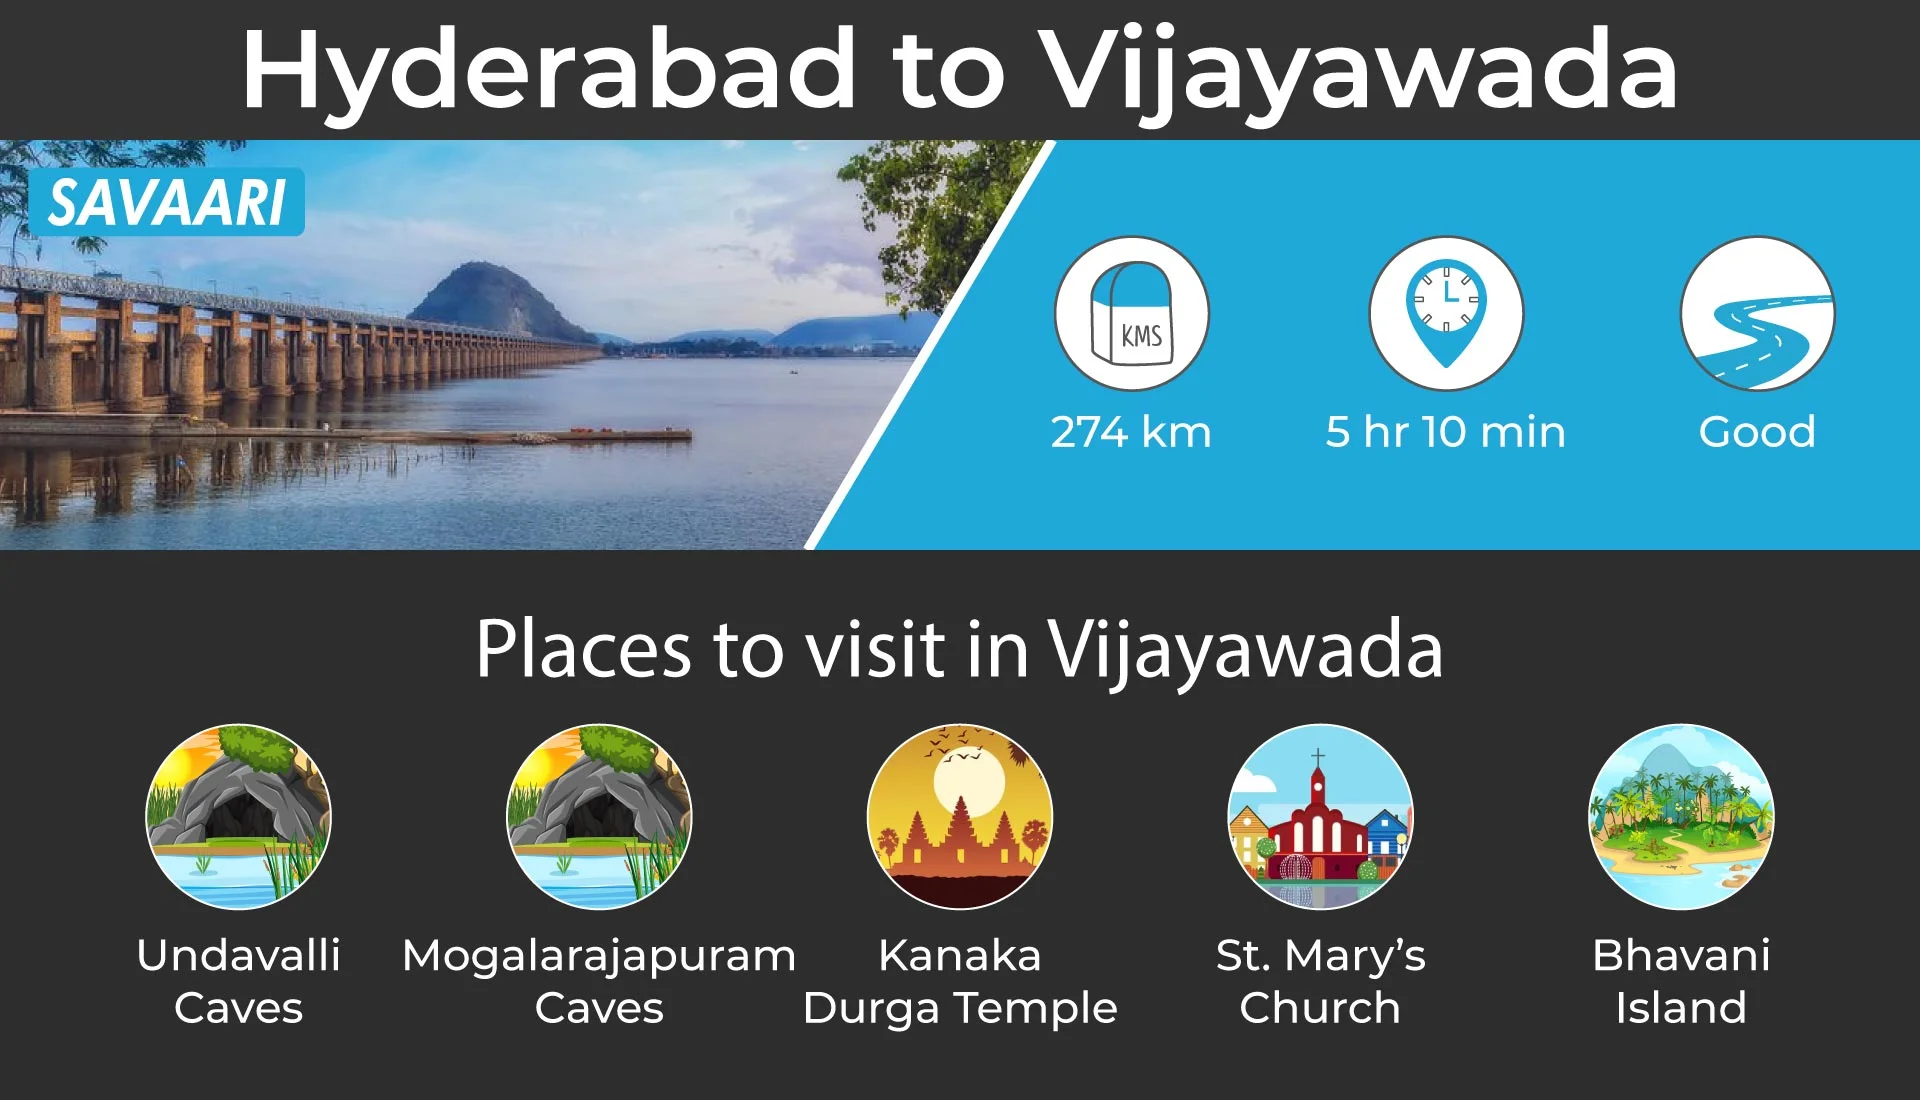 Places to visit near Hyderabad - Vijaywada